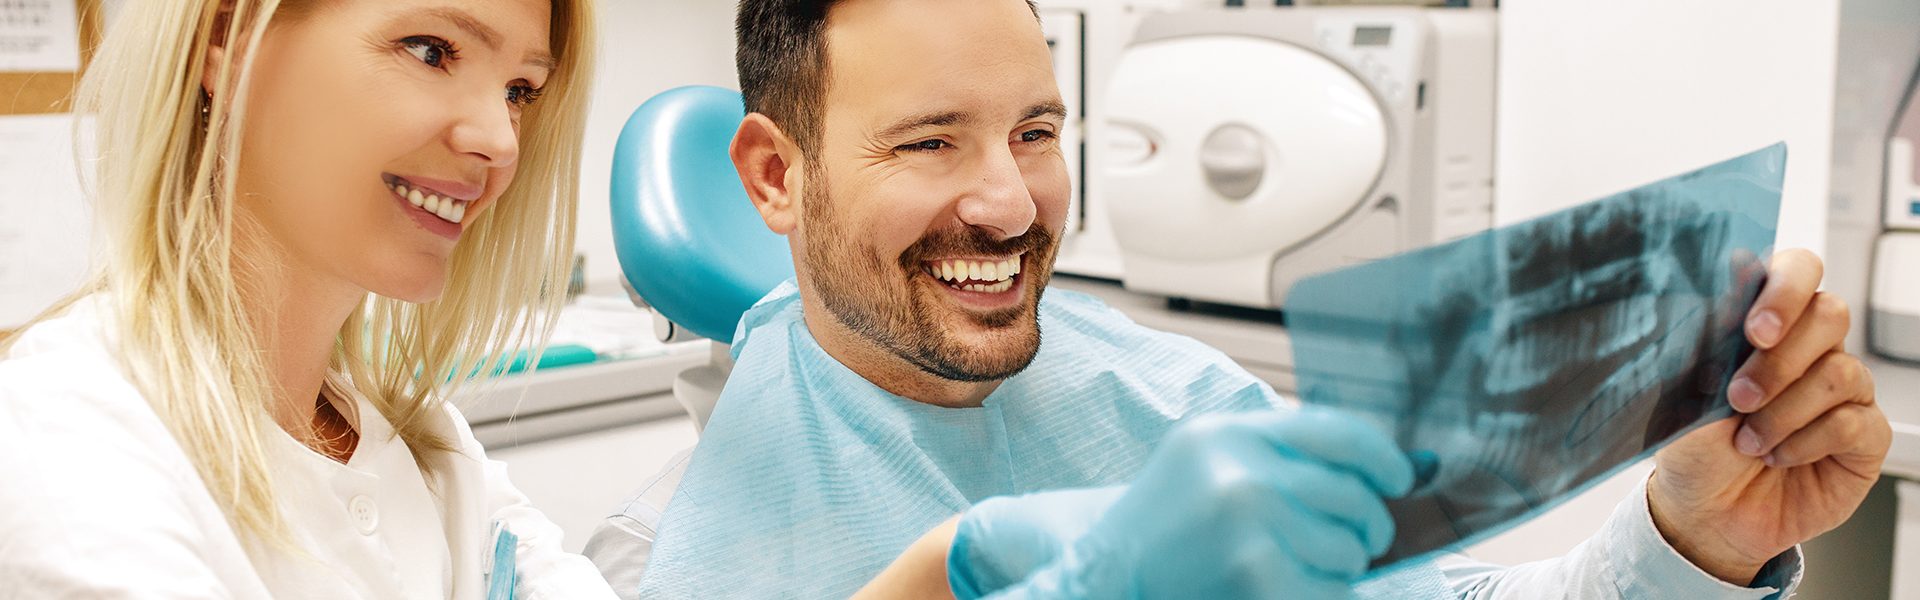 4 Important Benefits of Regular Dental Checkups